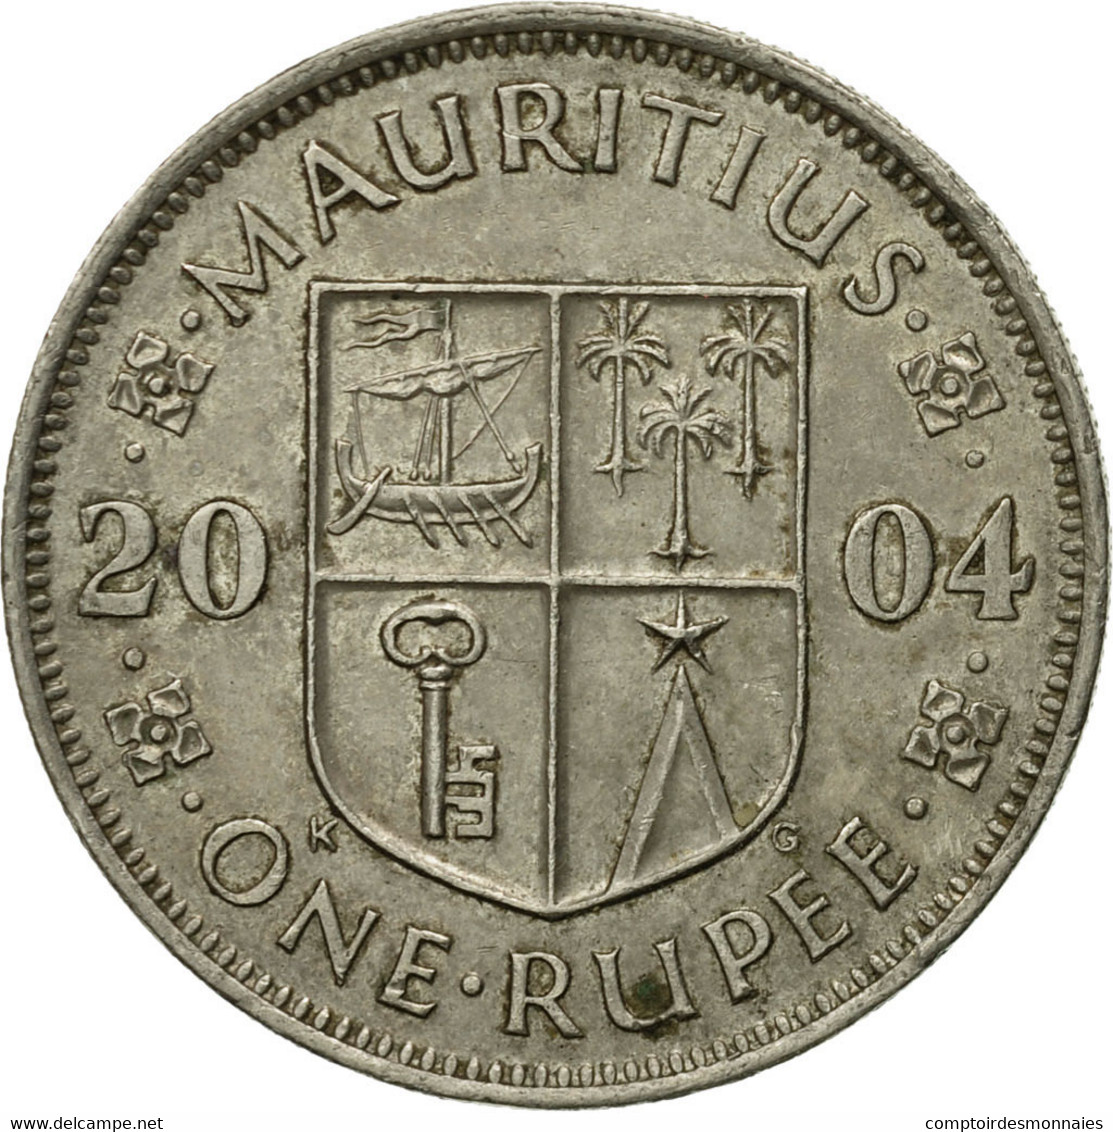 Monnaie, Mauritius, Rupee, 2004, TB+, Copper-nickel, KM:55 - Maurice